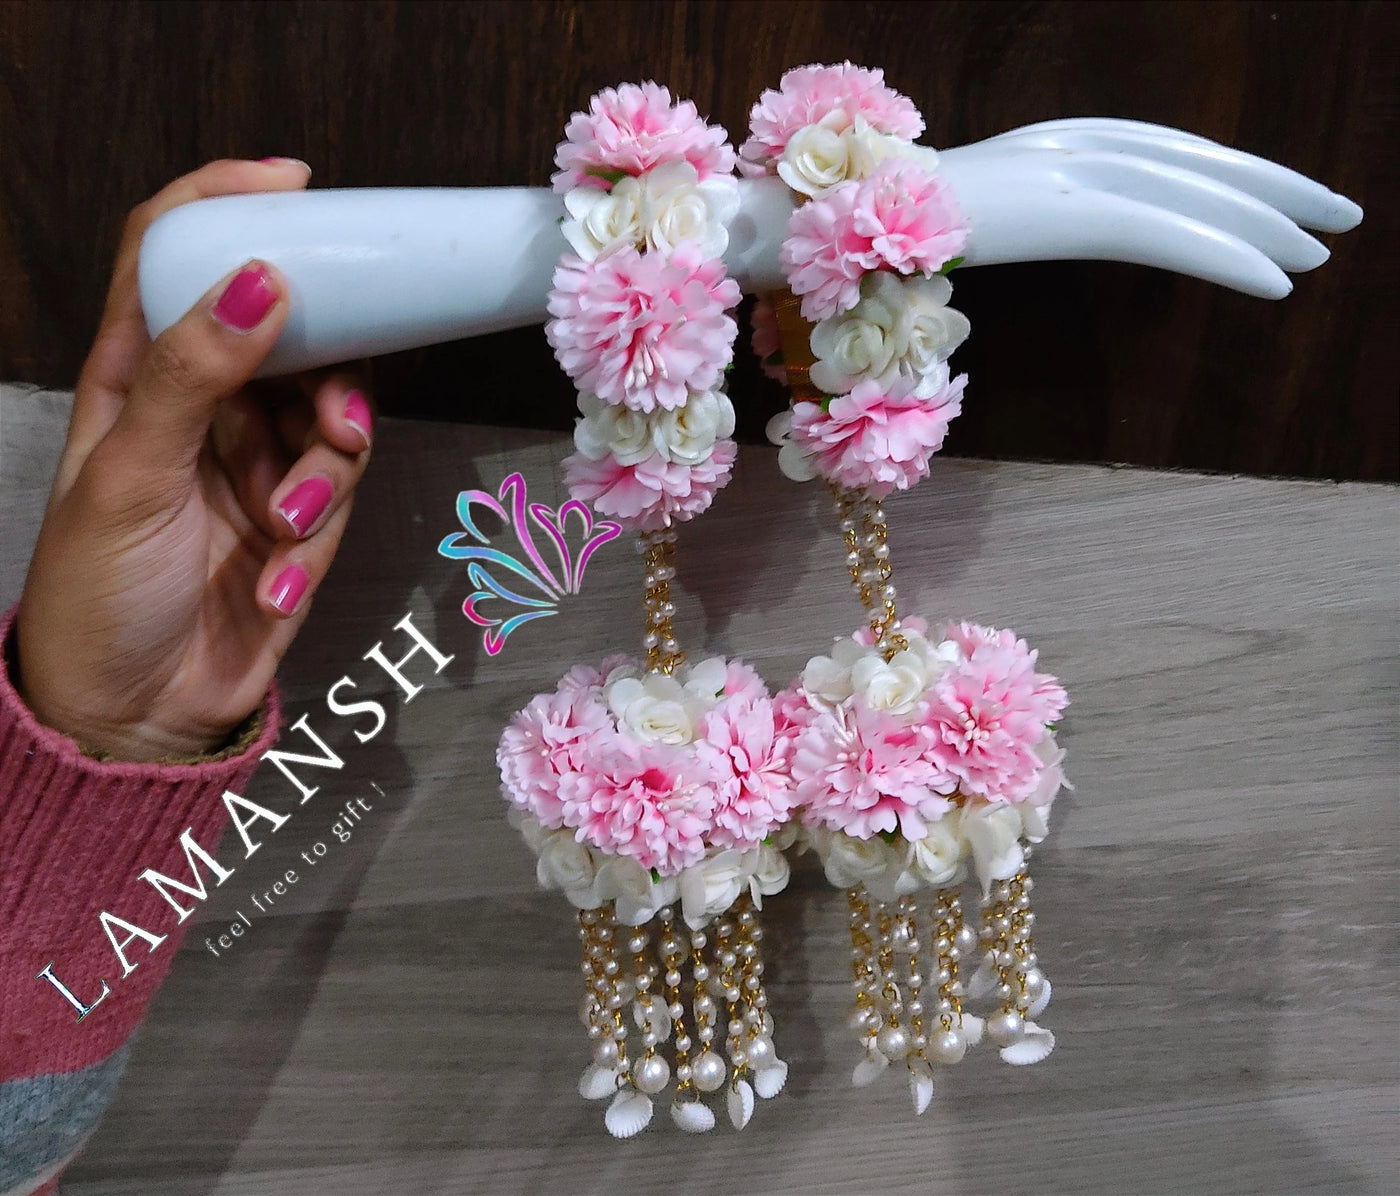 Lamansh Floral 🌺 Kalire 2 Floral Bracelets with Kaleere Set / Baby Pink & White LAMANSH® Pair of Floral 🌺 Bangles with Kaleere / Artificial Flower Kalire set for Haldi Mehendi ceremony